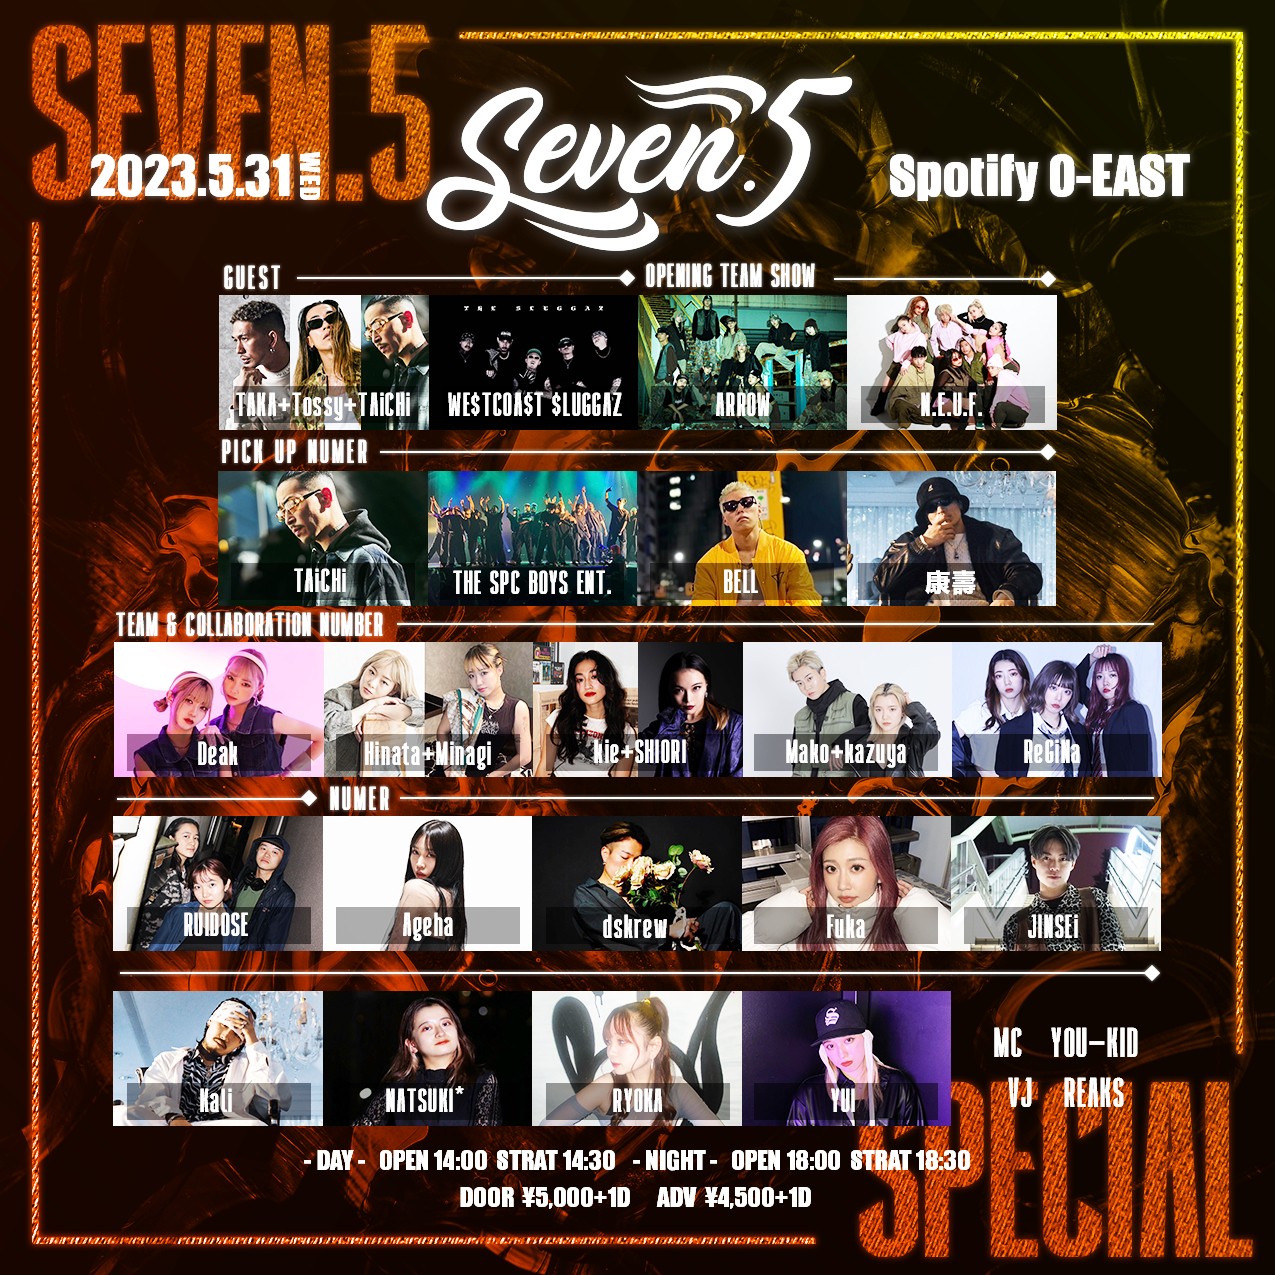 “Seven.5 SPECIAL” Night